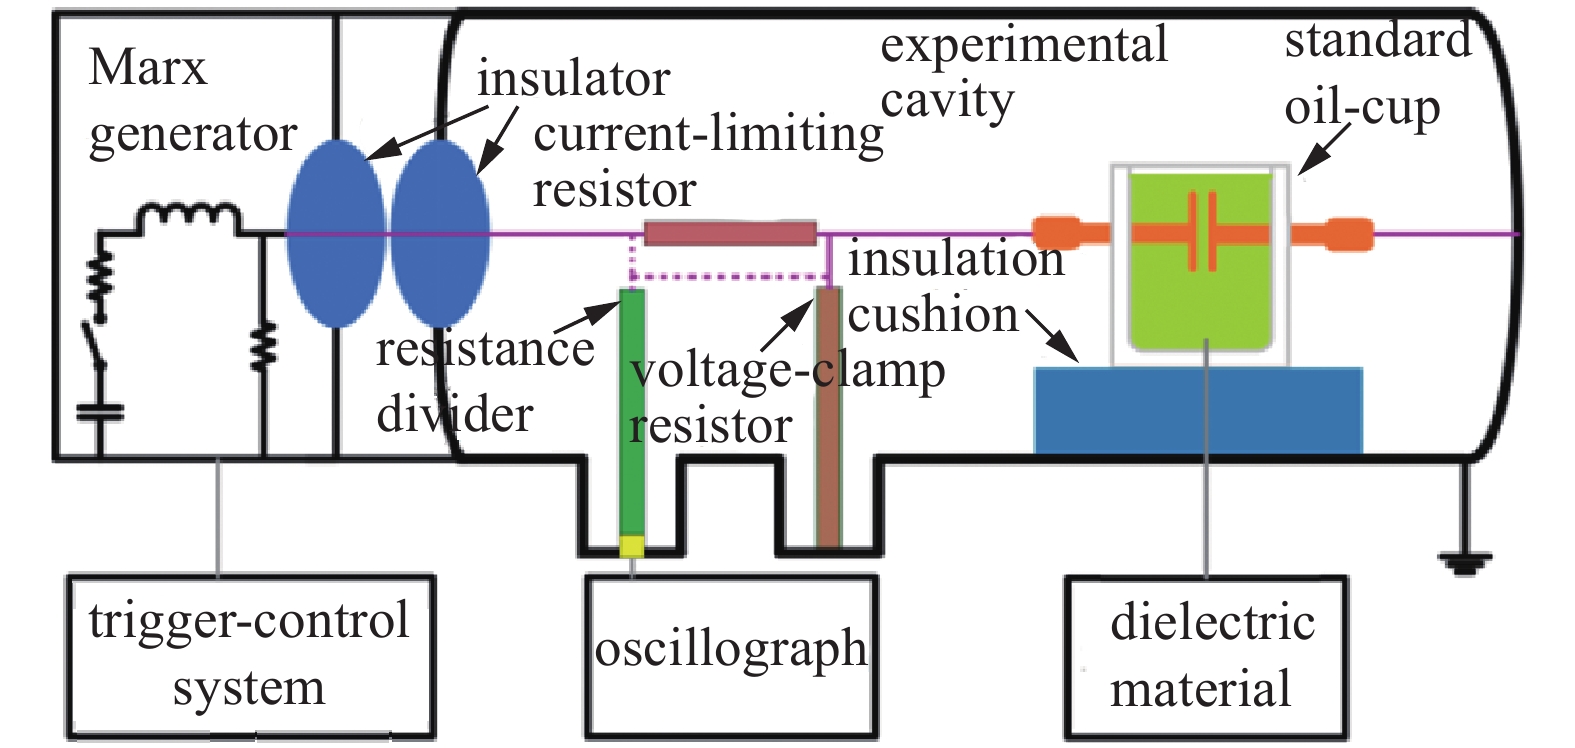 Composition of the nanosecond-pulse test platform